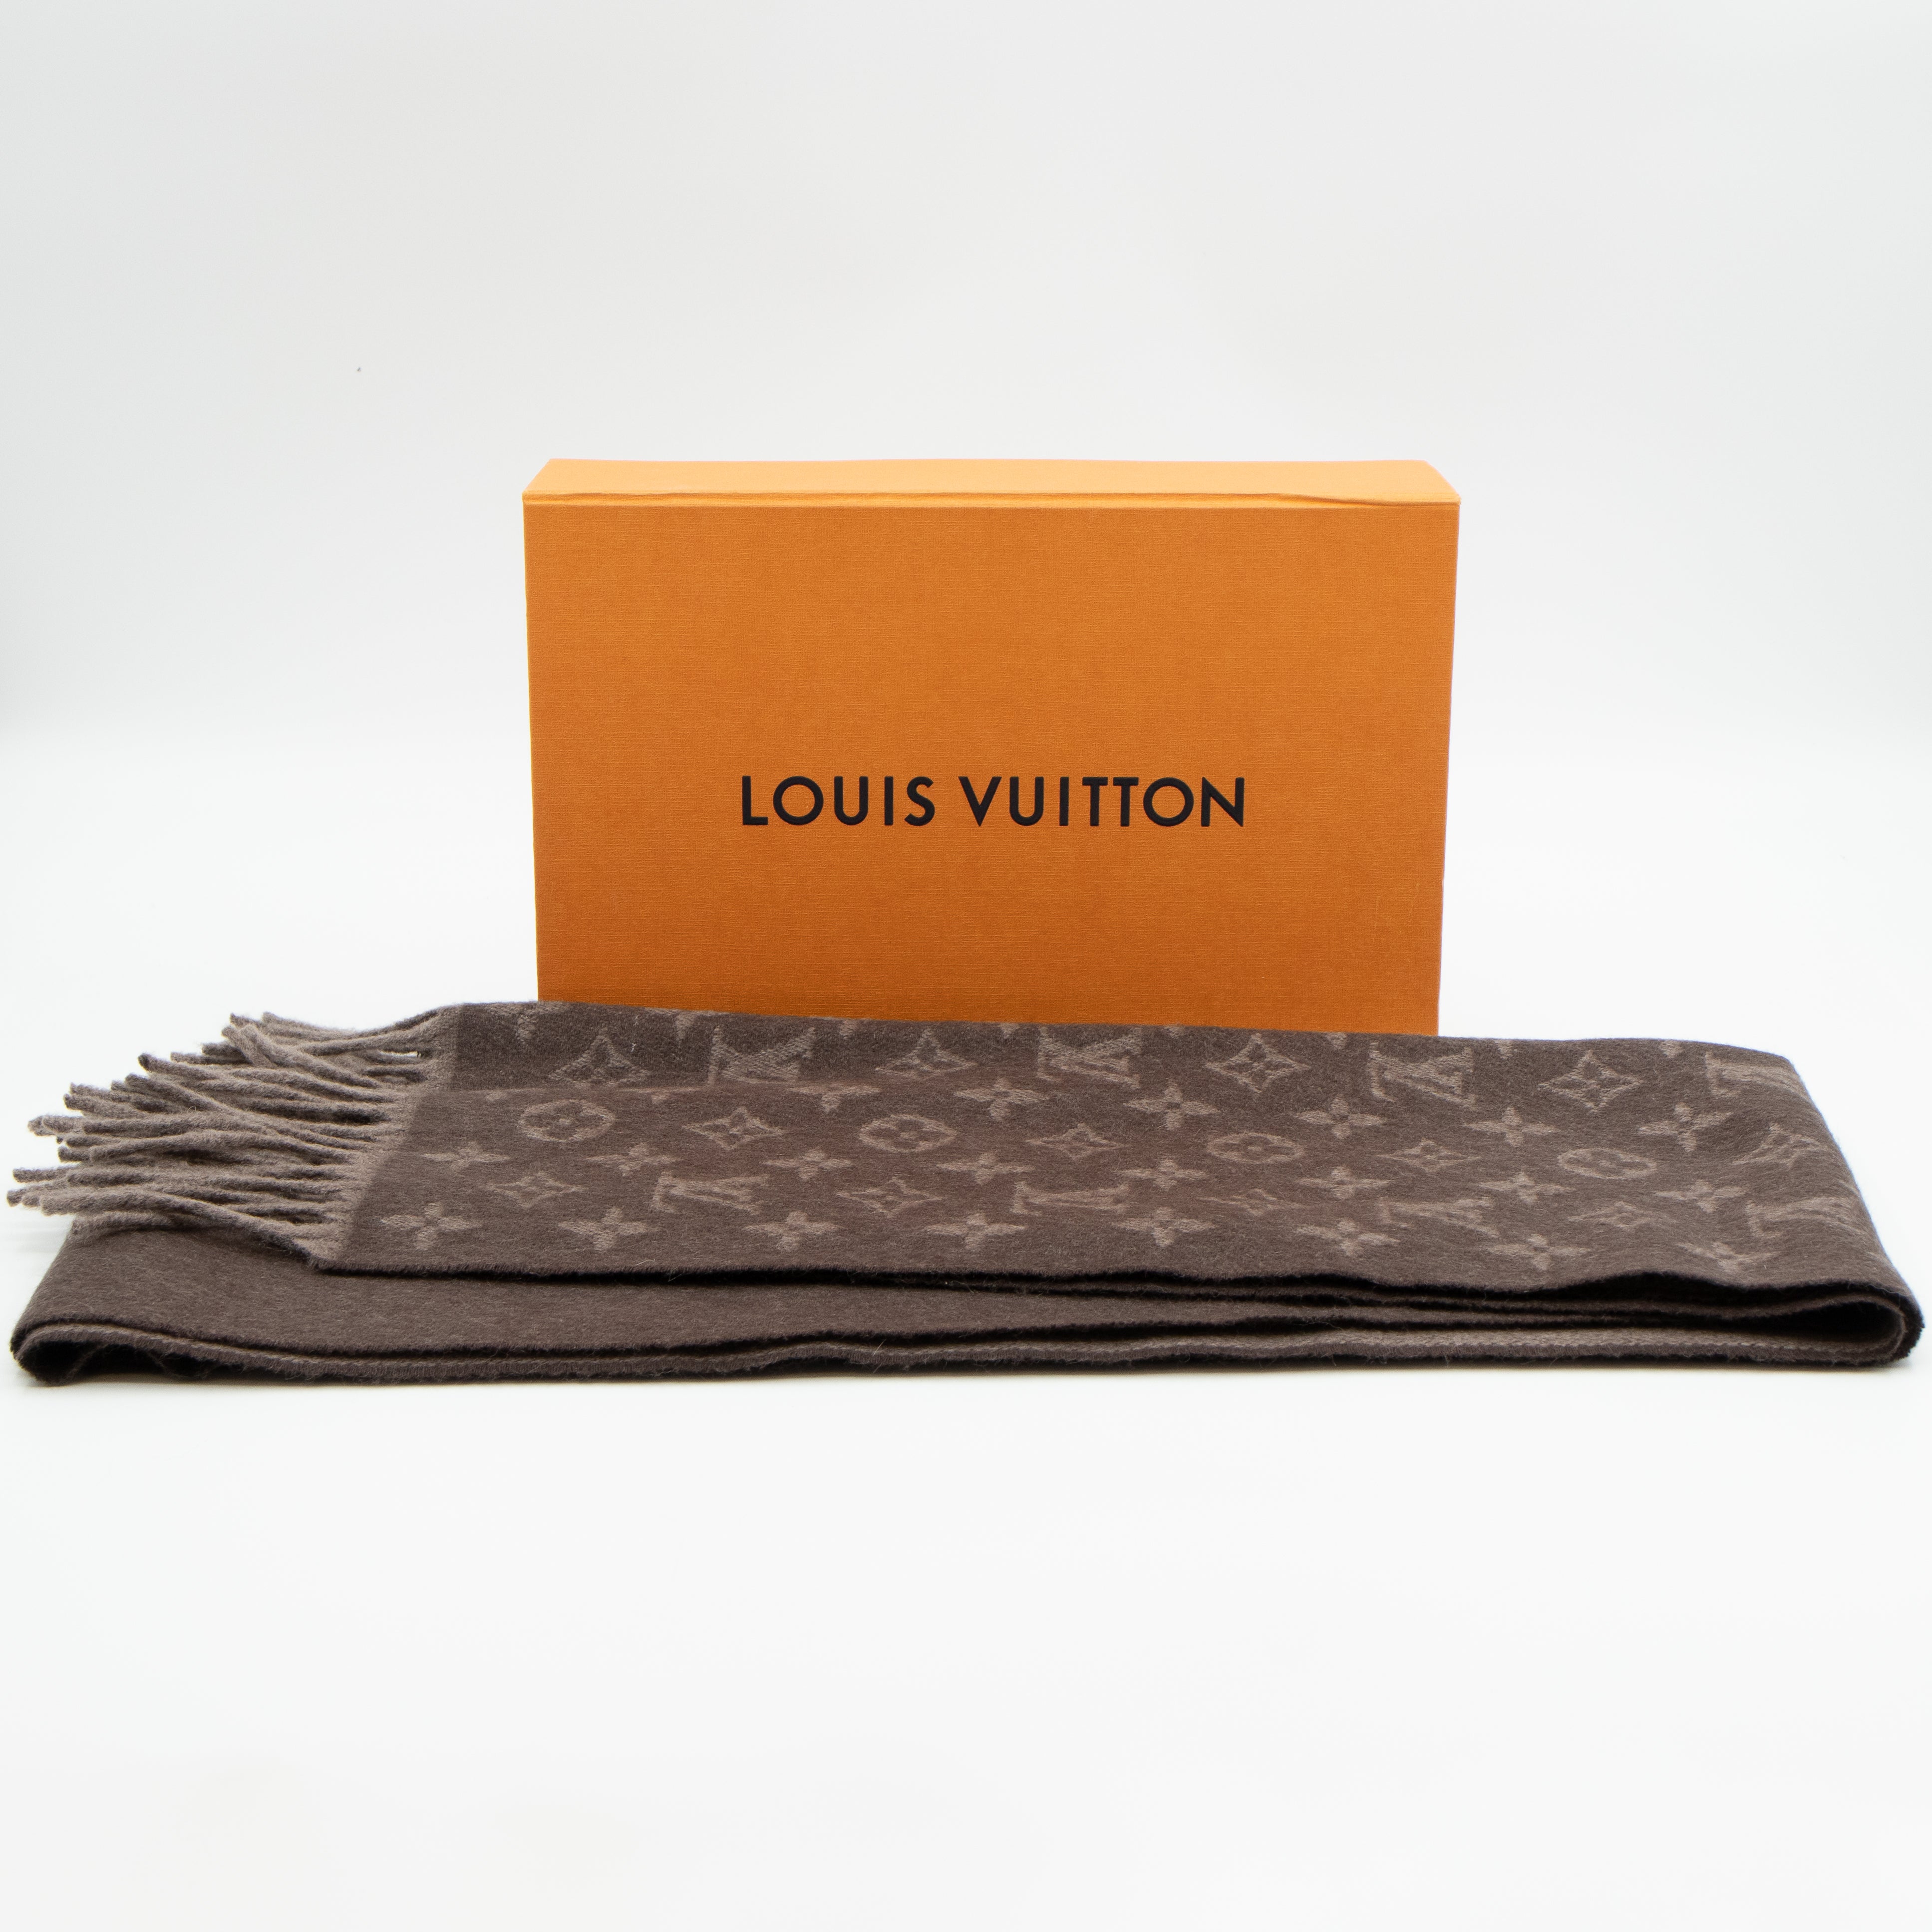 Louis Vuitton Gold Gradient Logo Black Windown Curtain - Masteez